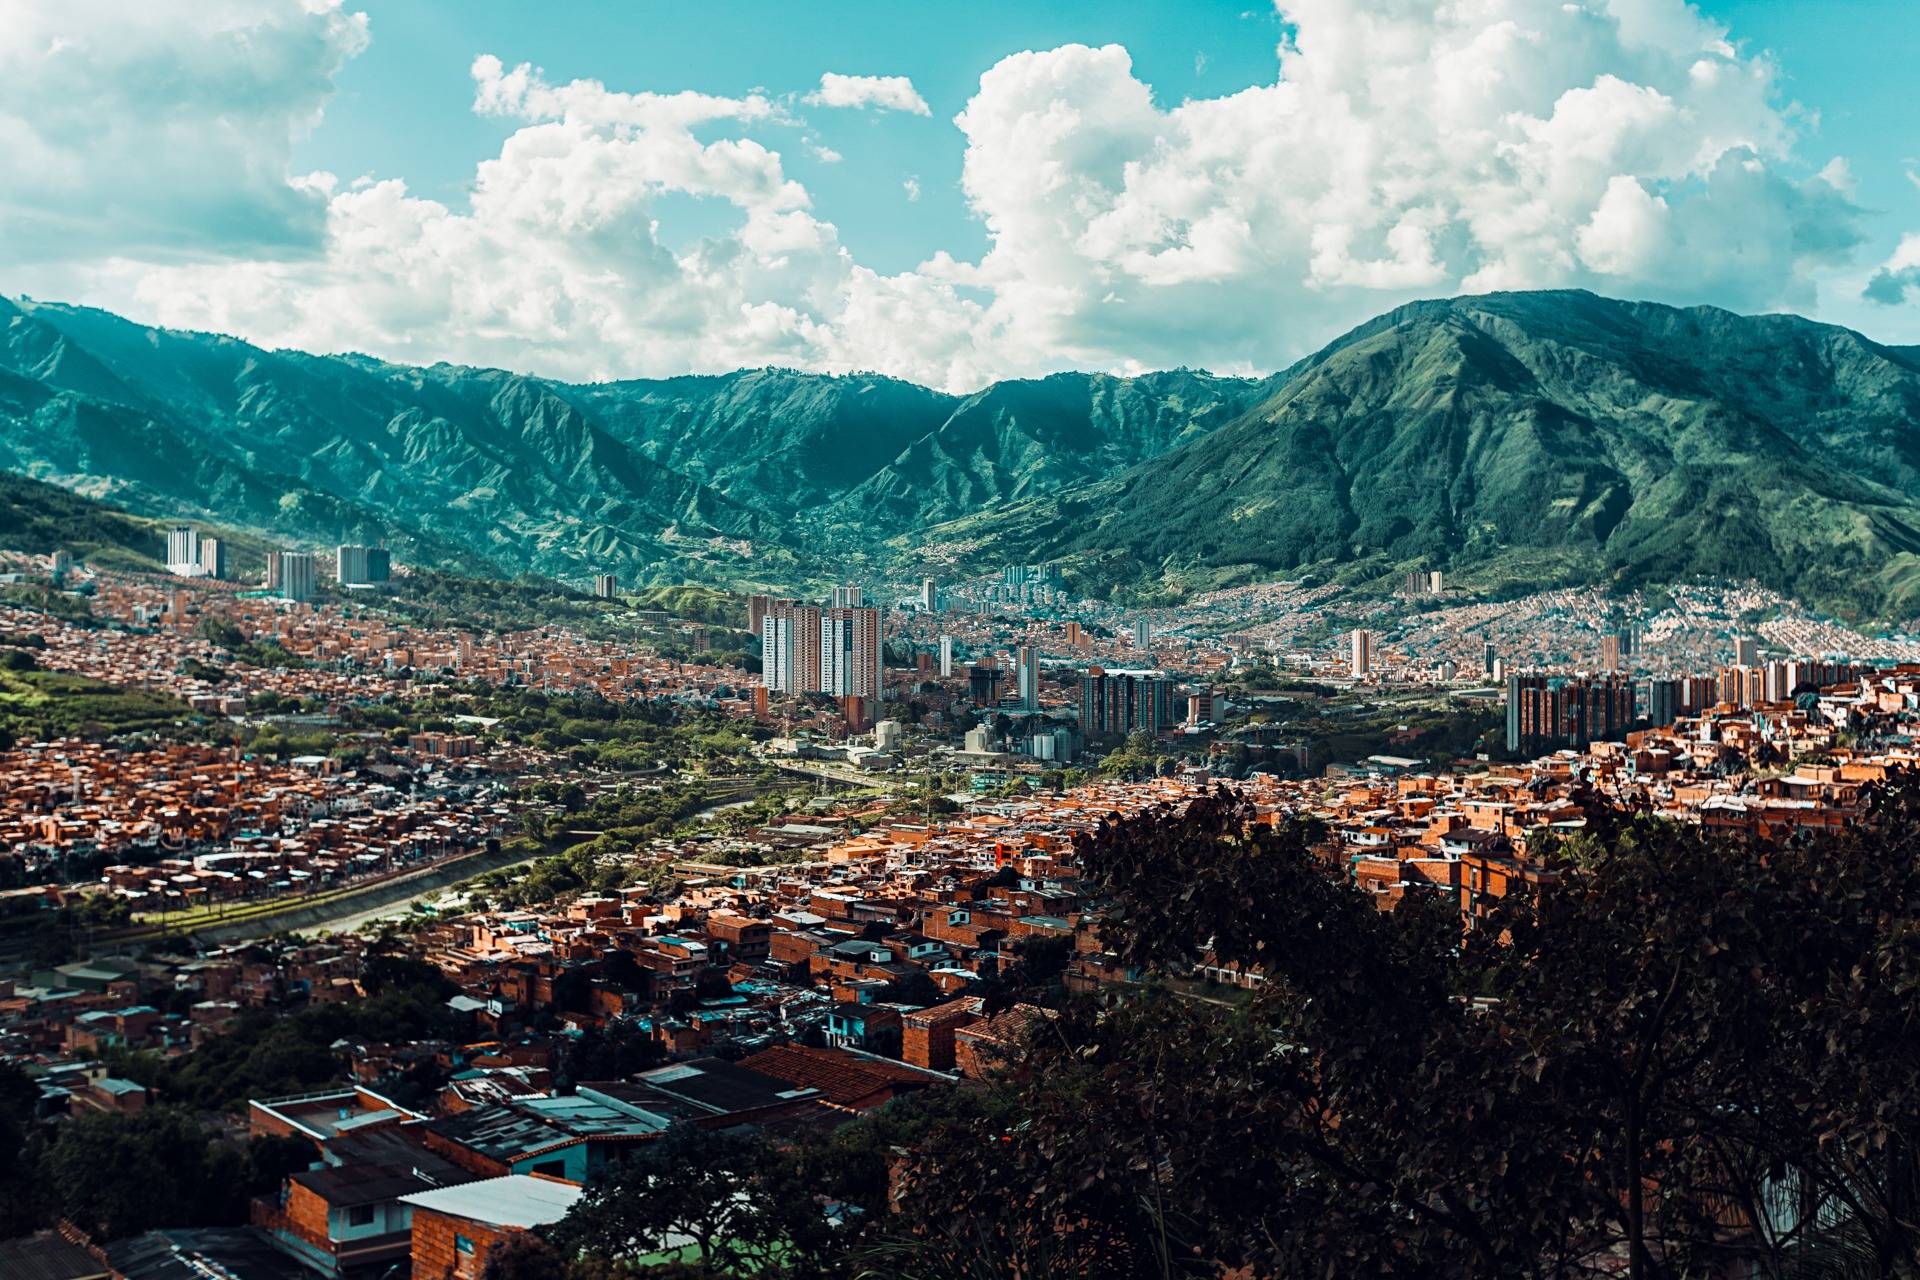 PhotoFeed Around The World - A Taste of Medellin